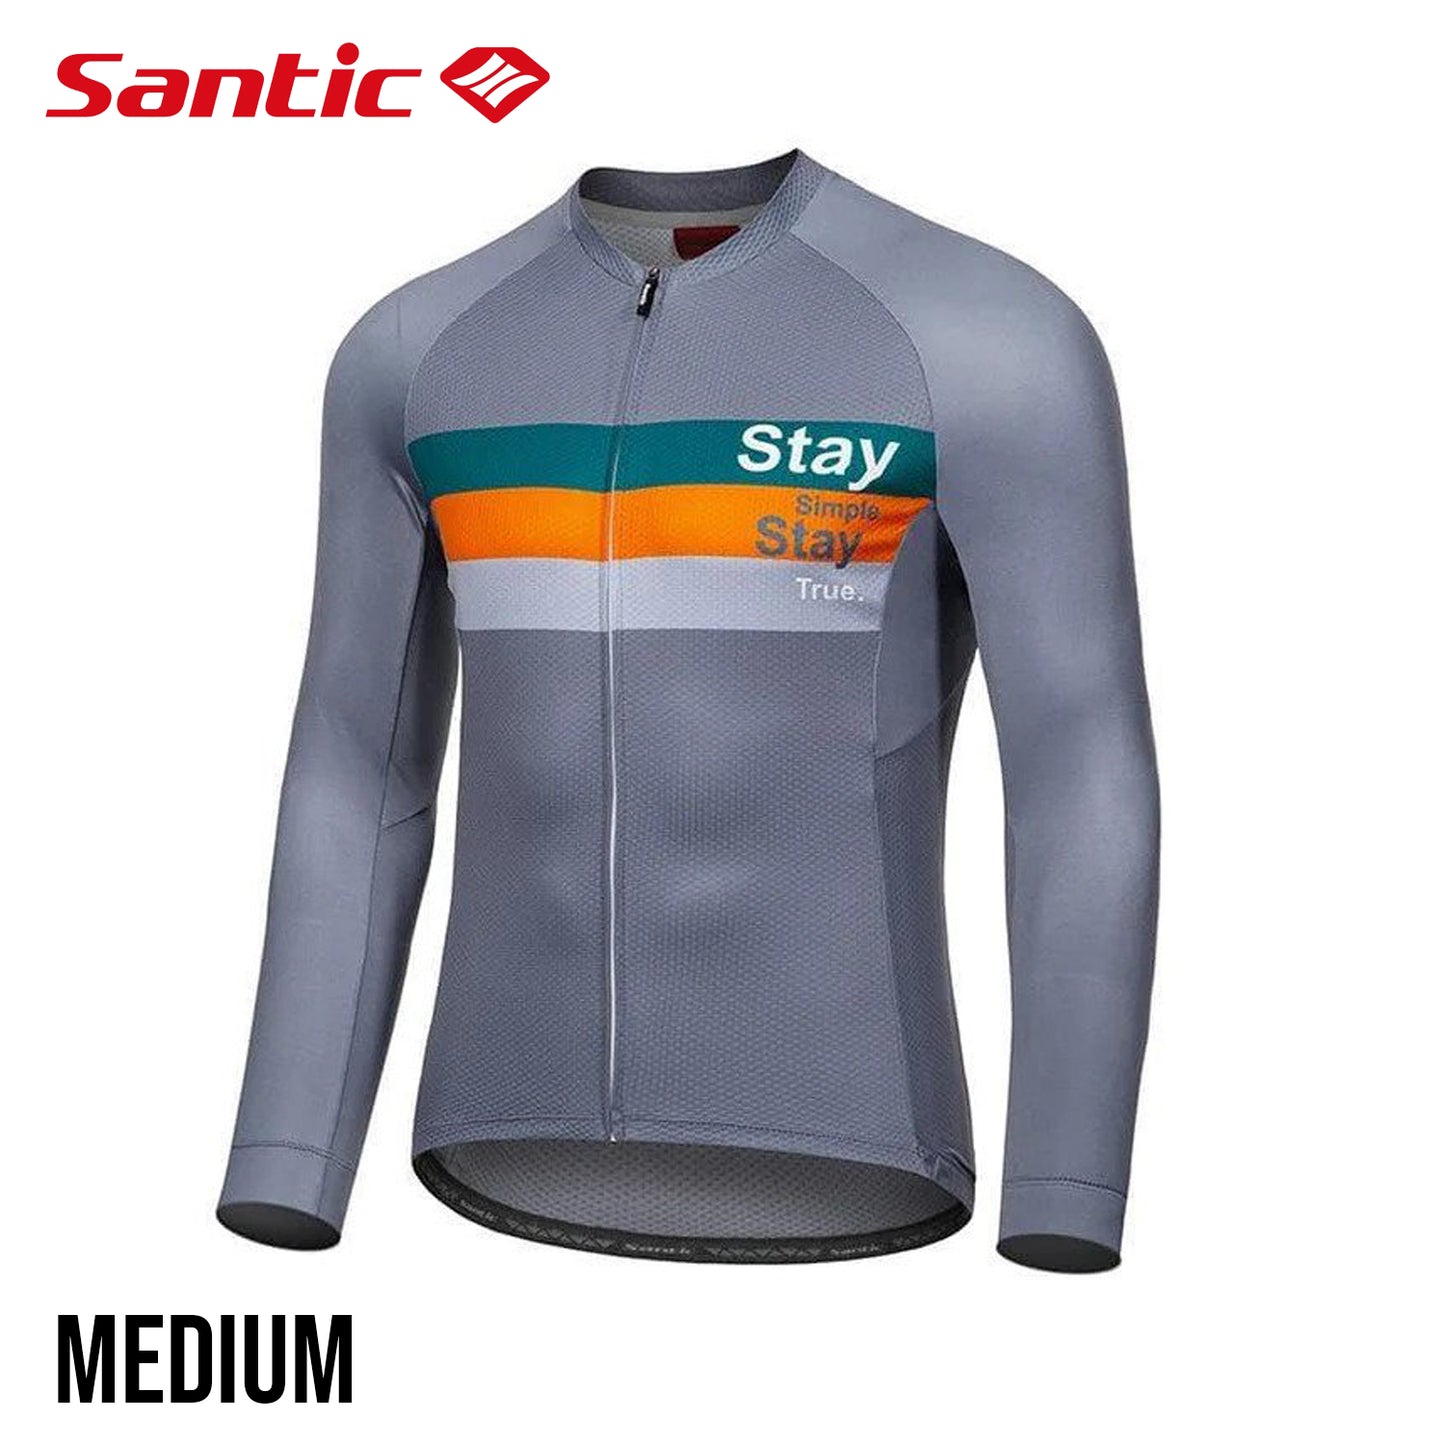 Santic Siyo Men's Long Sleeve Spring Summer Jersey - Gray